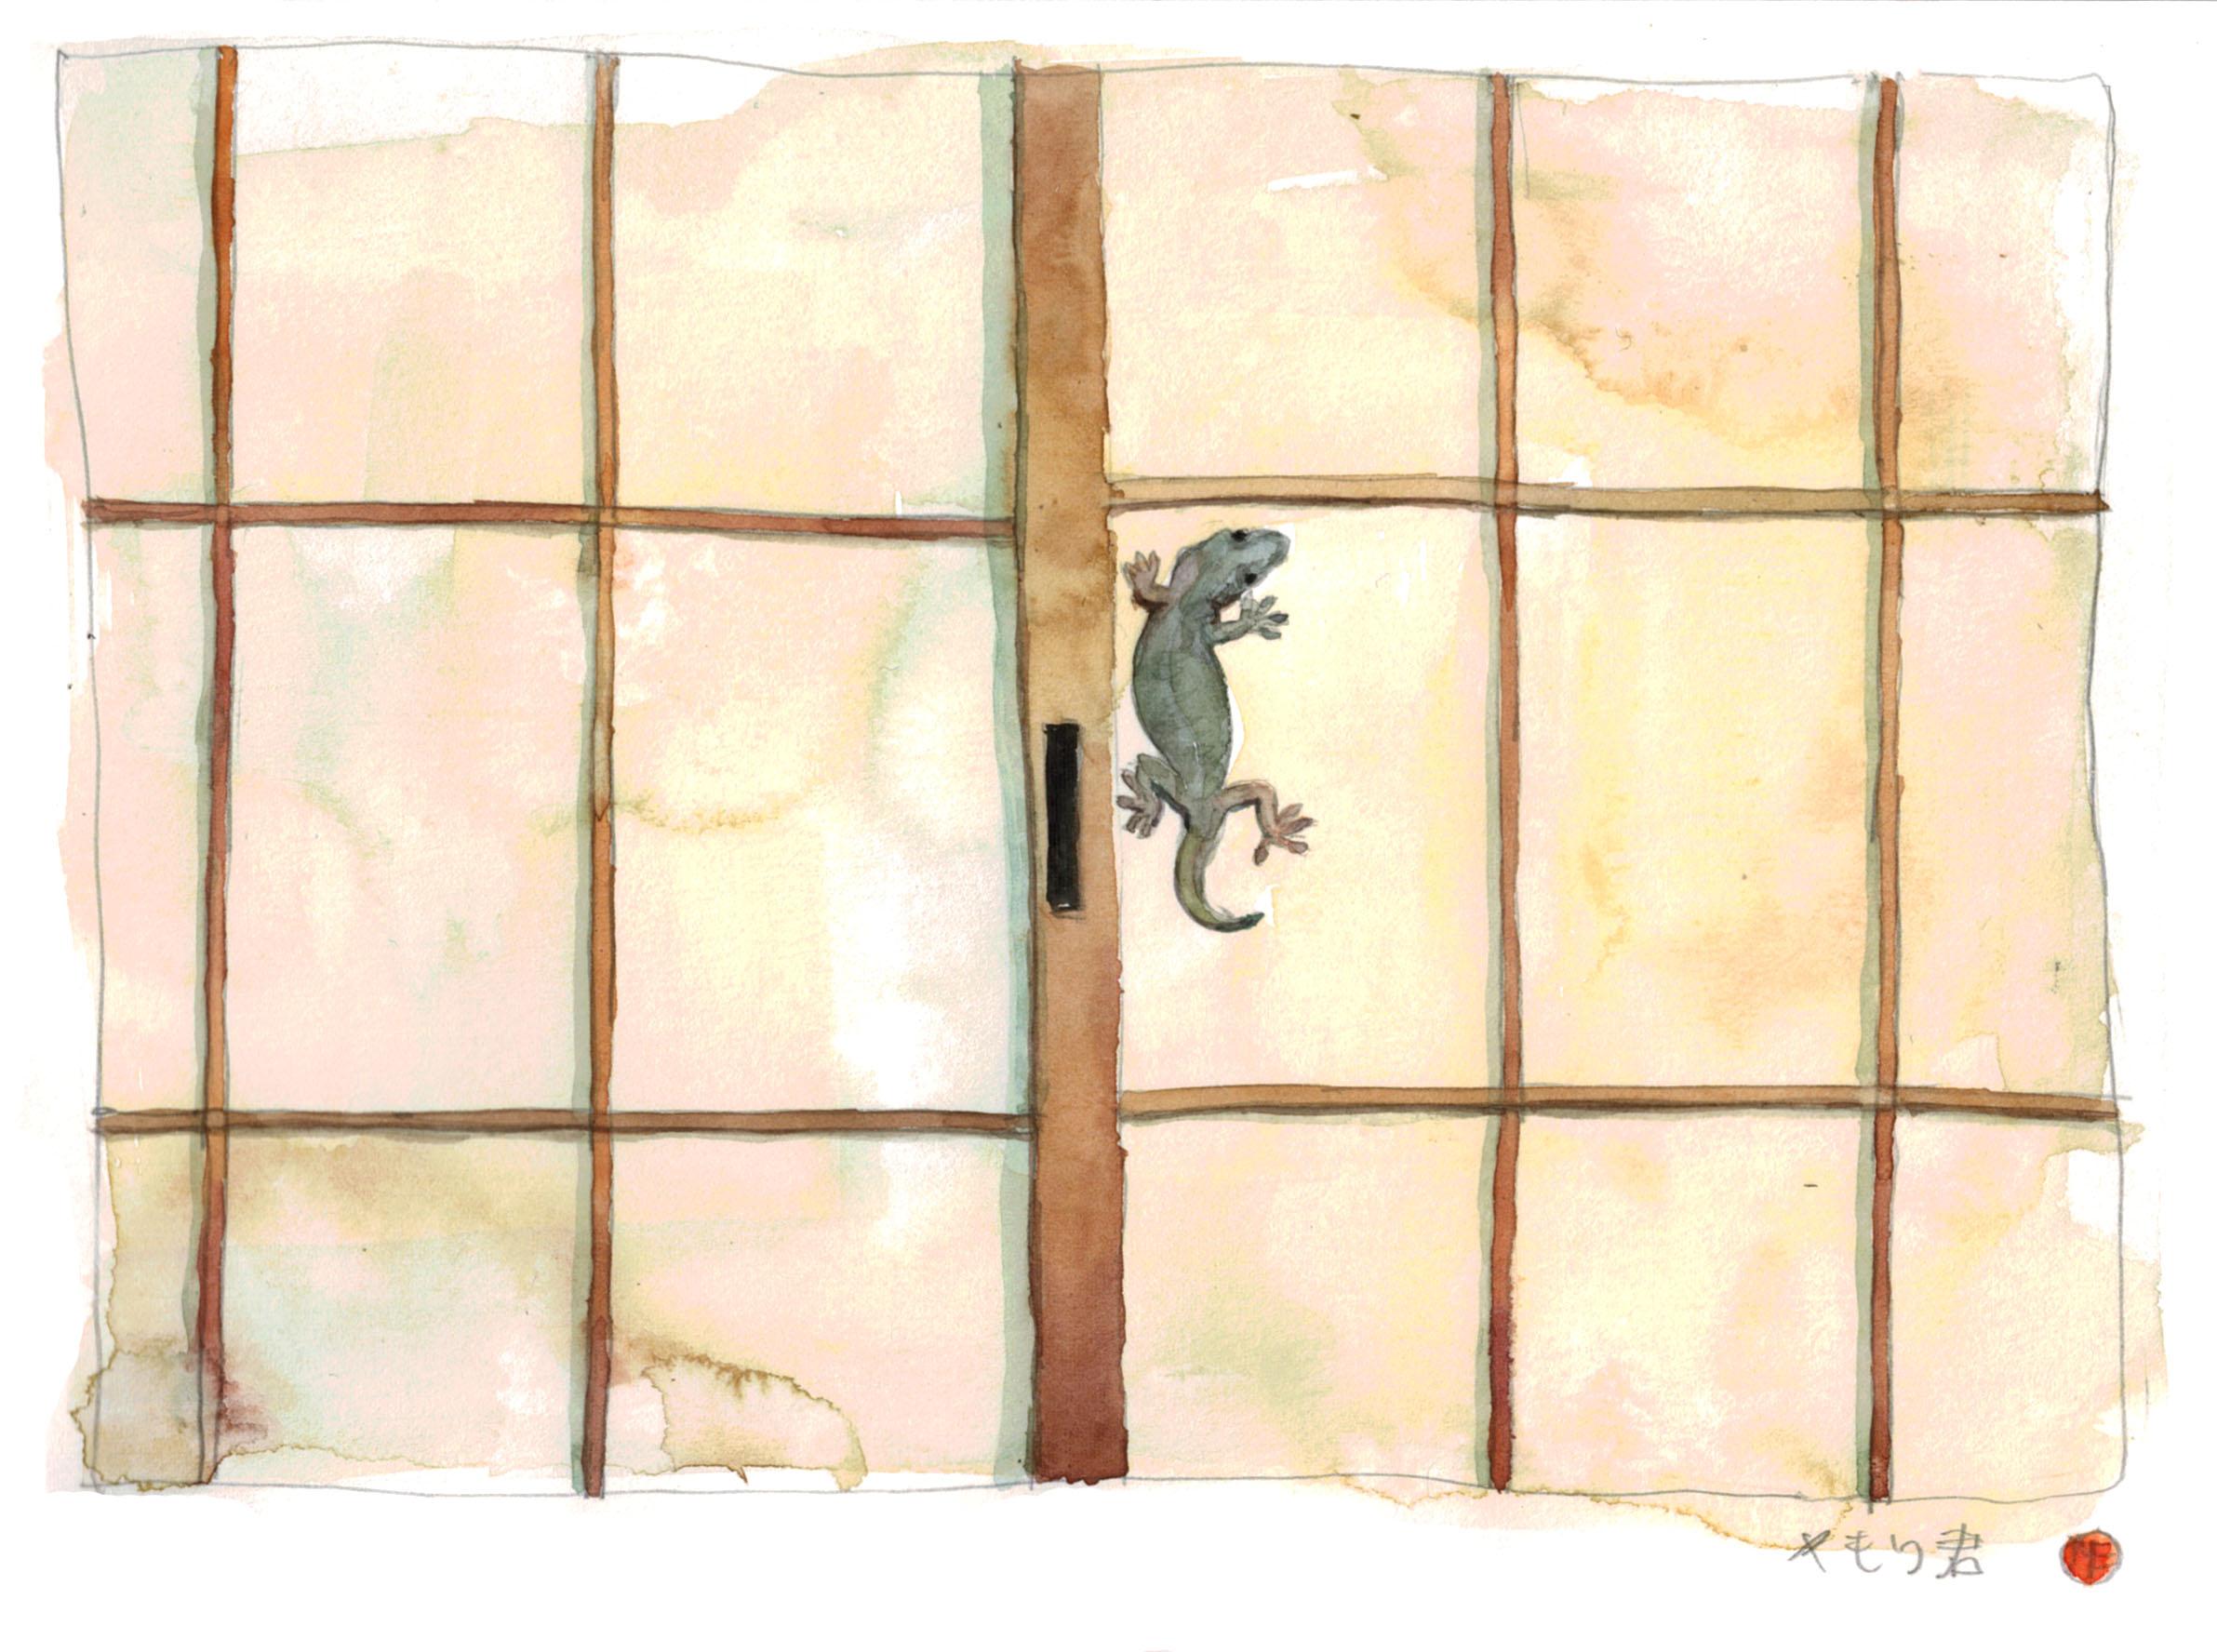 Gecko on the window